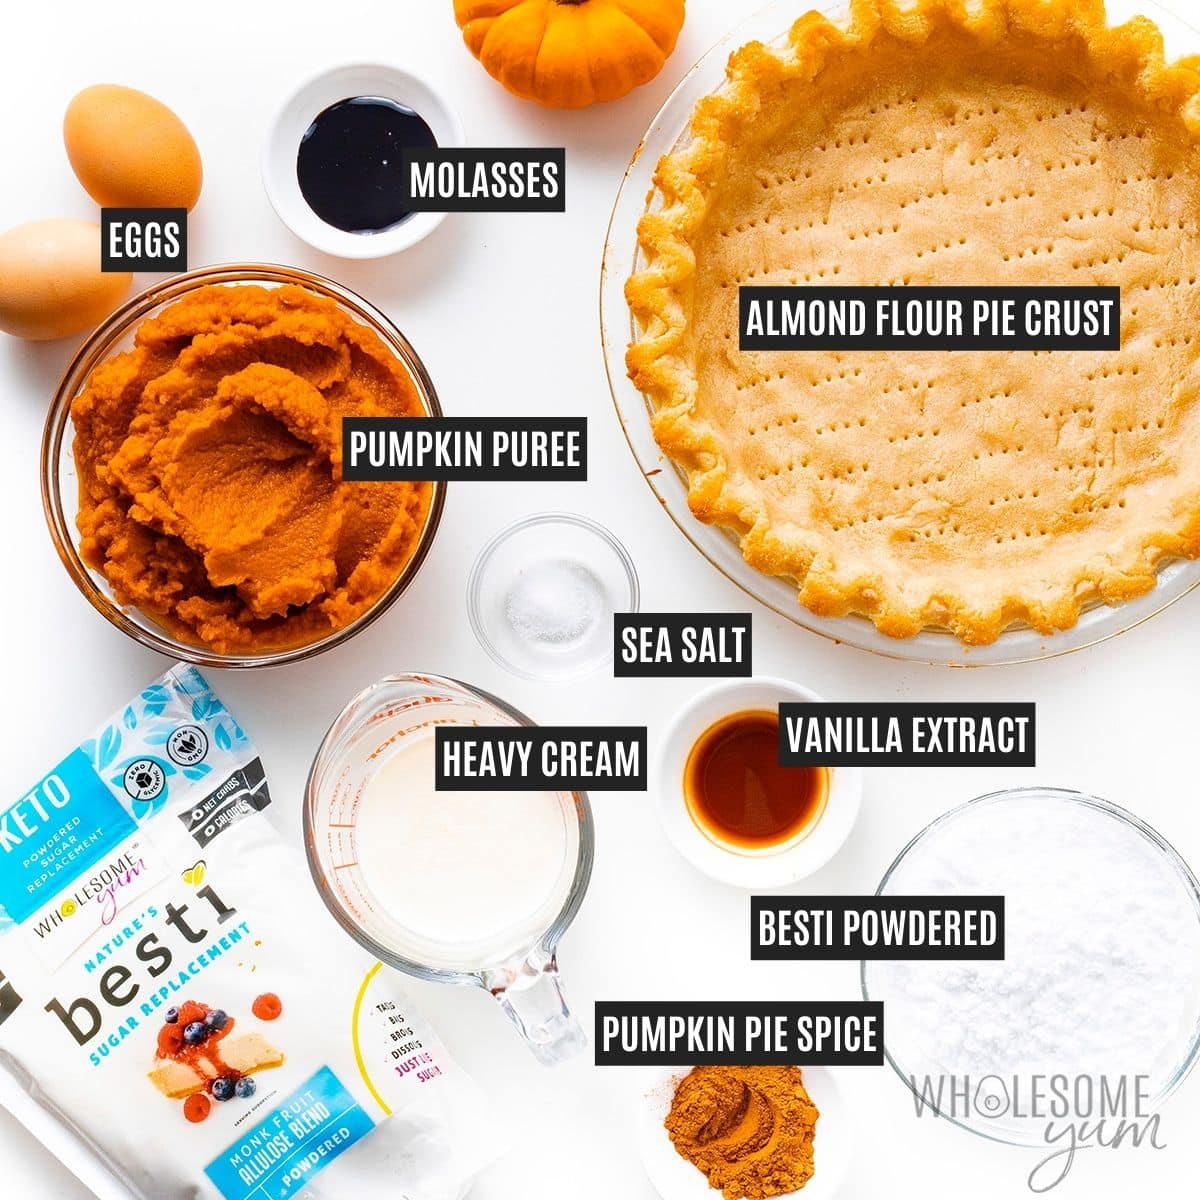 Keto pumpkin pie recipe ingredients.